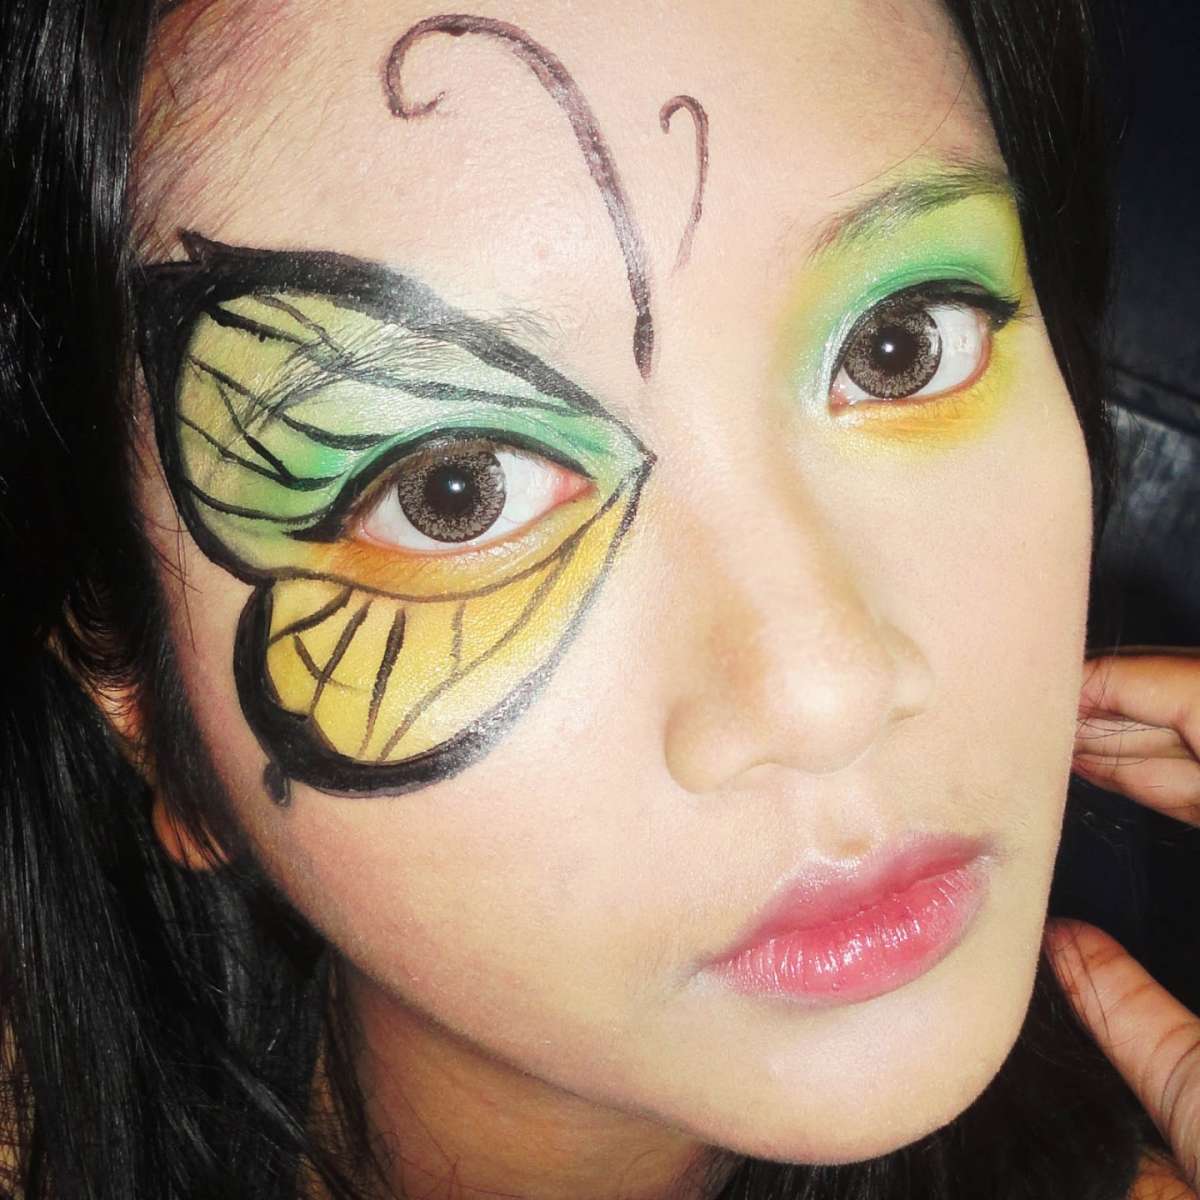 Butterfly makeup